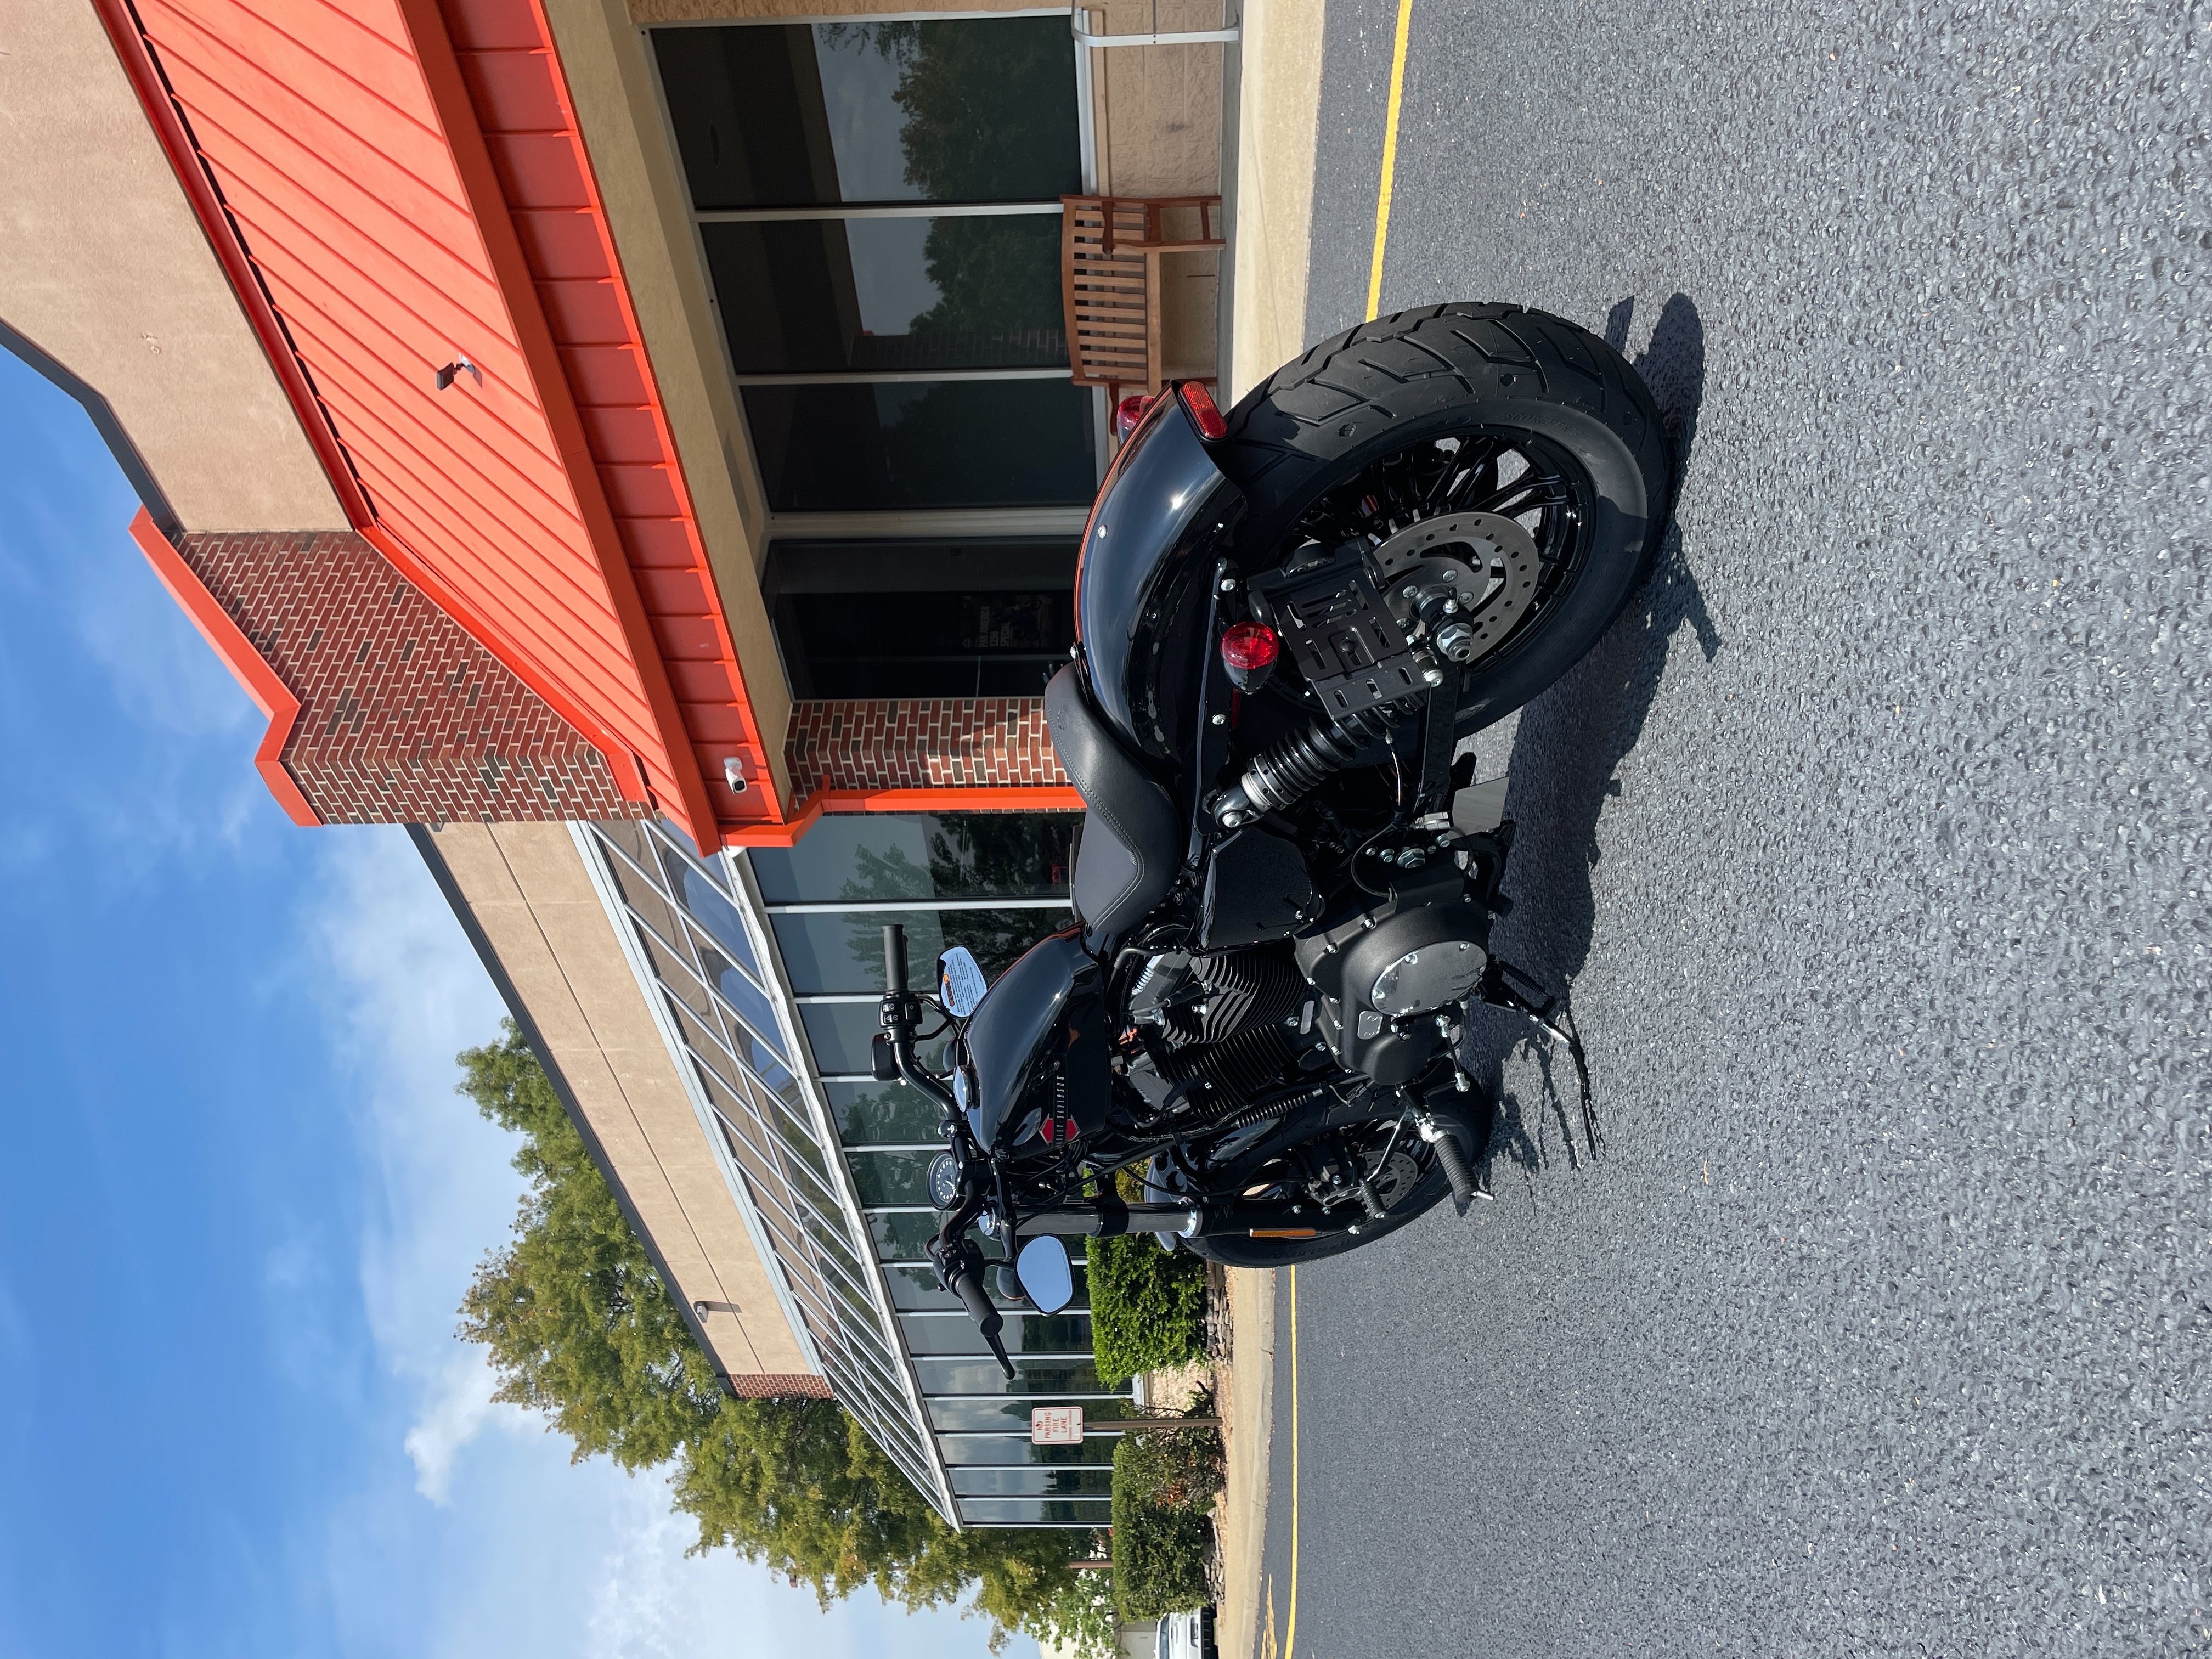 2022 Harley-Davidson Sportster Forty-Eight at Hampton Roads Harley-Davidson